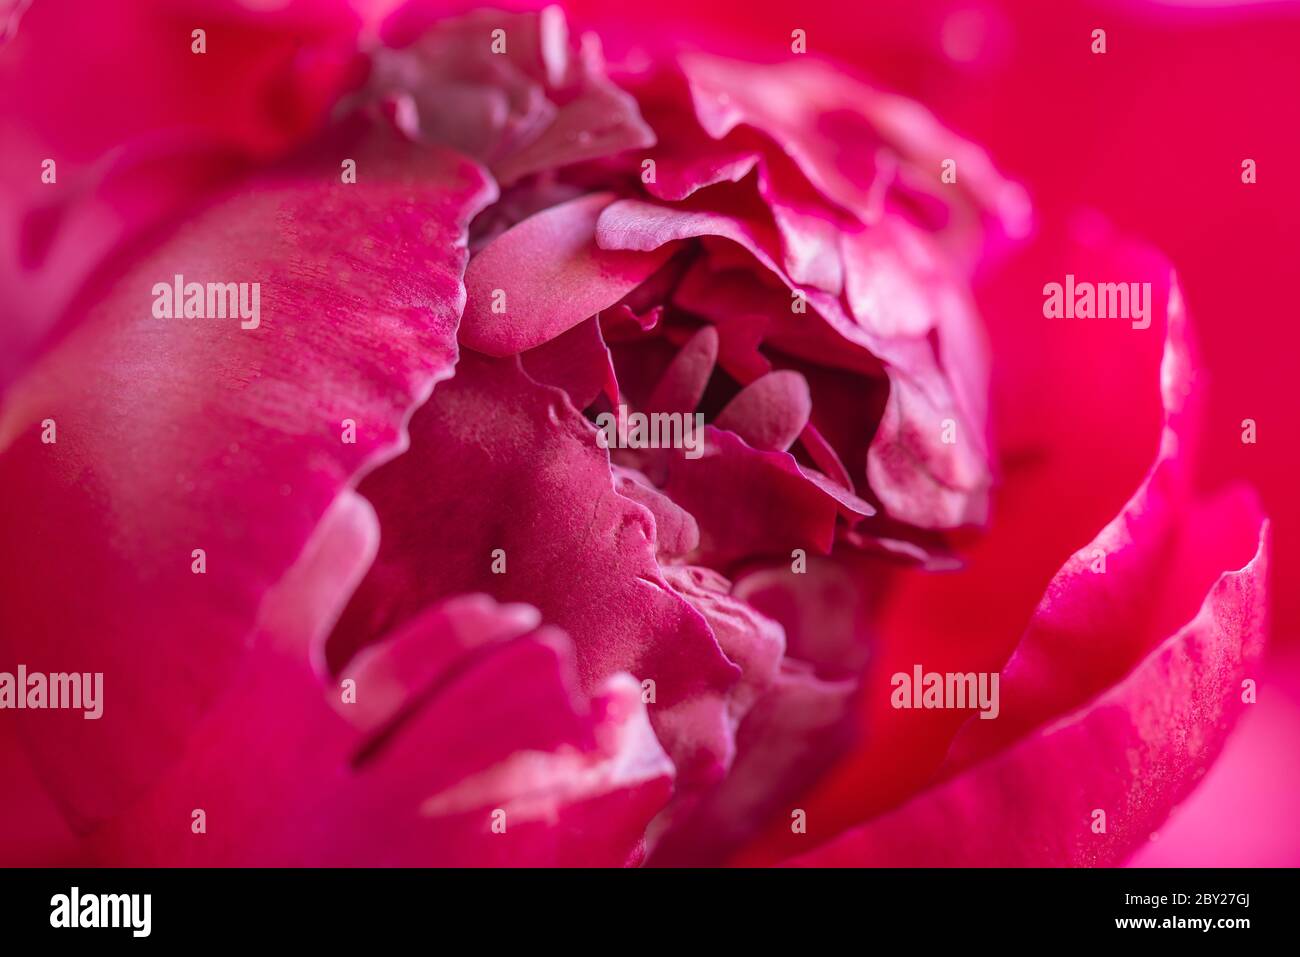 Macro photo red peony plant. Stock photo blooming red peony flower. Stock Photo